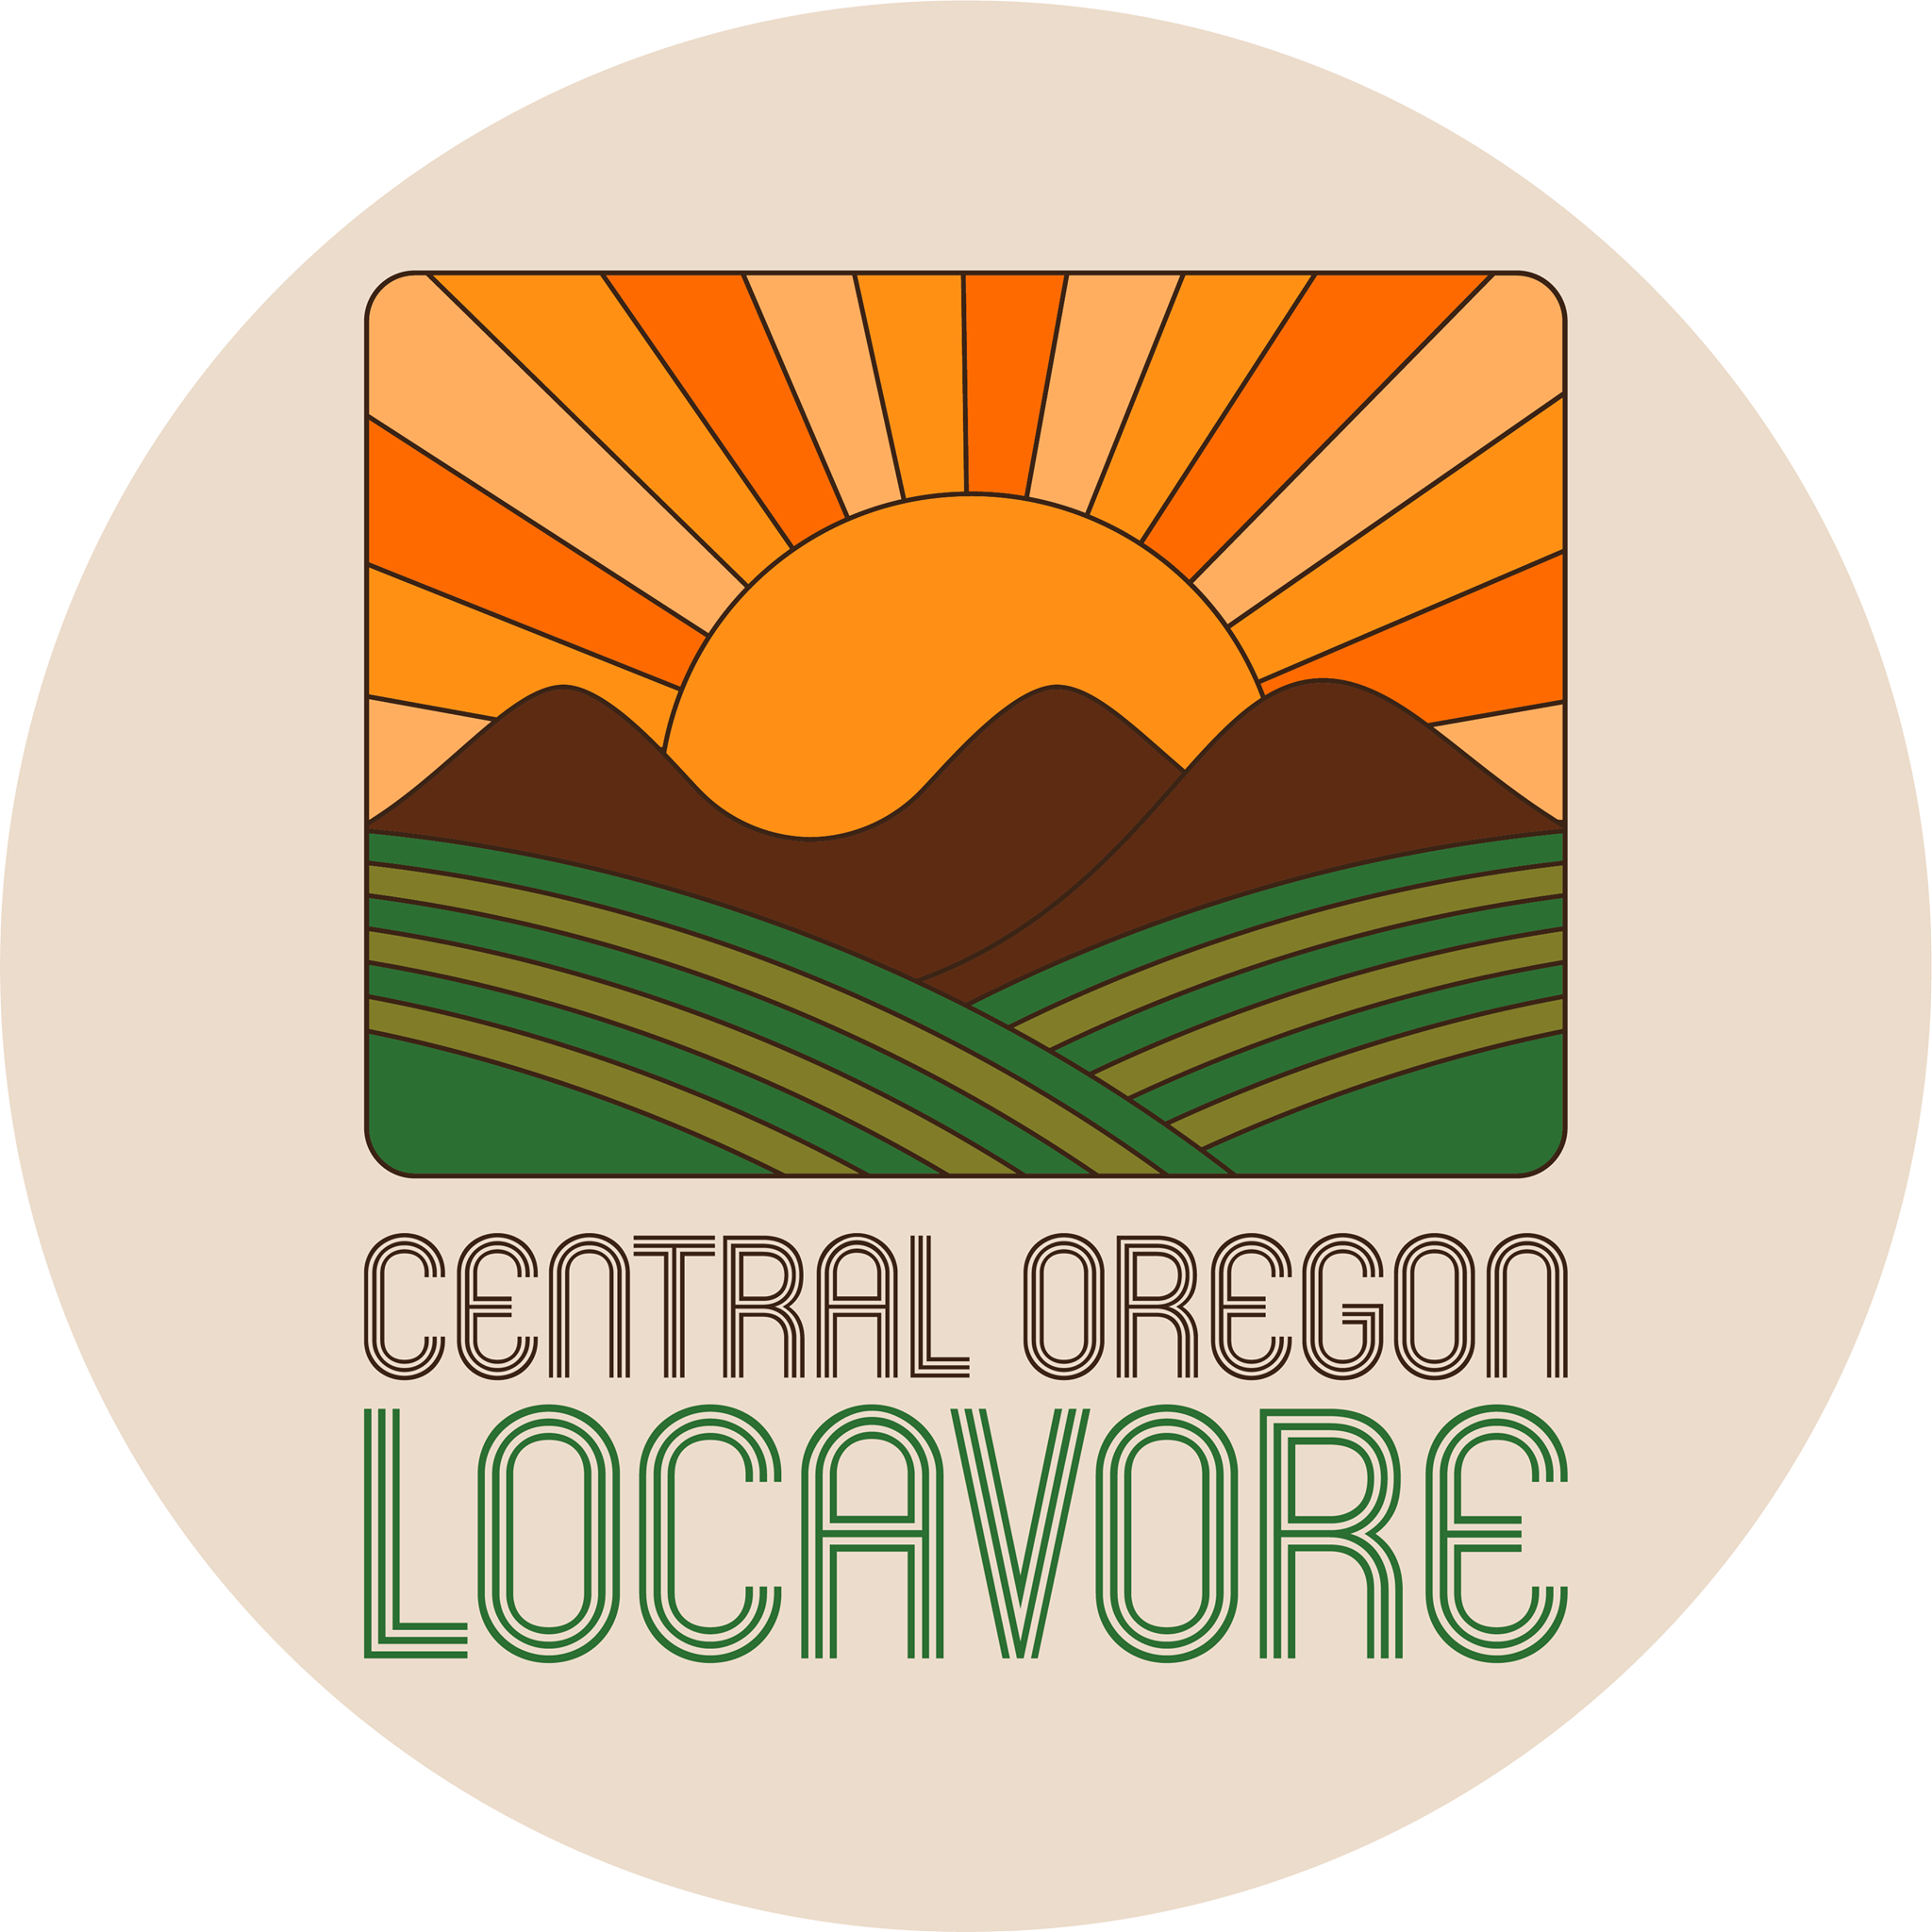 Business logo of Central Oregon Locavore Indoor Farmers Market